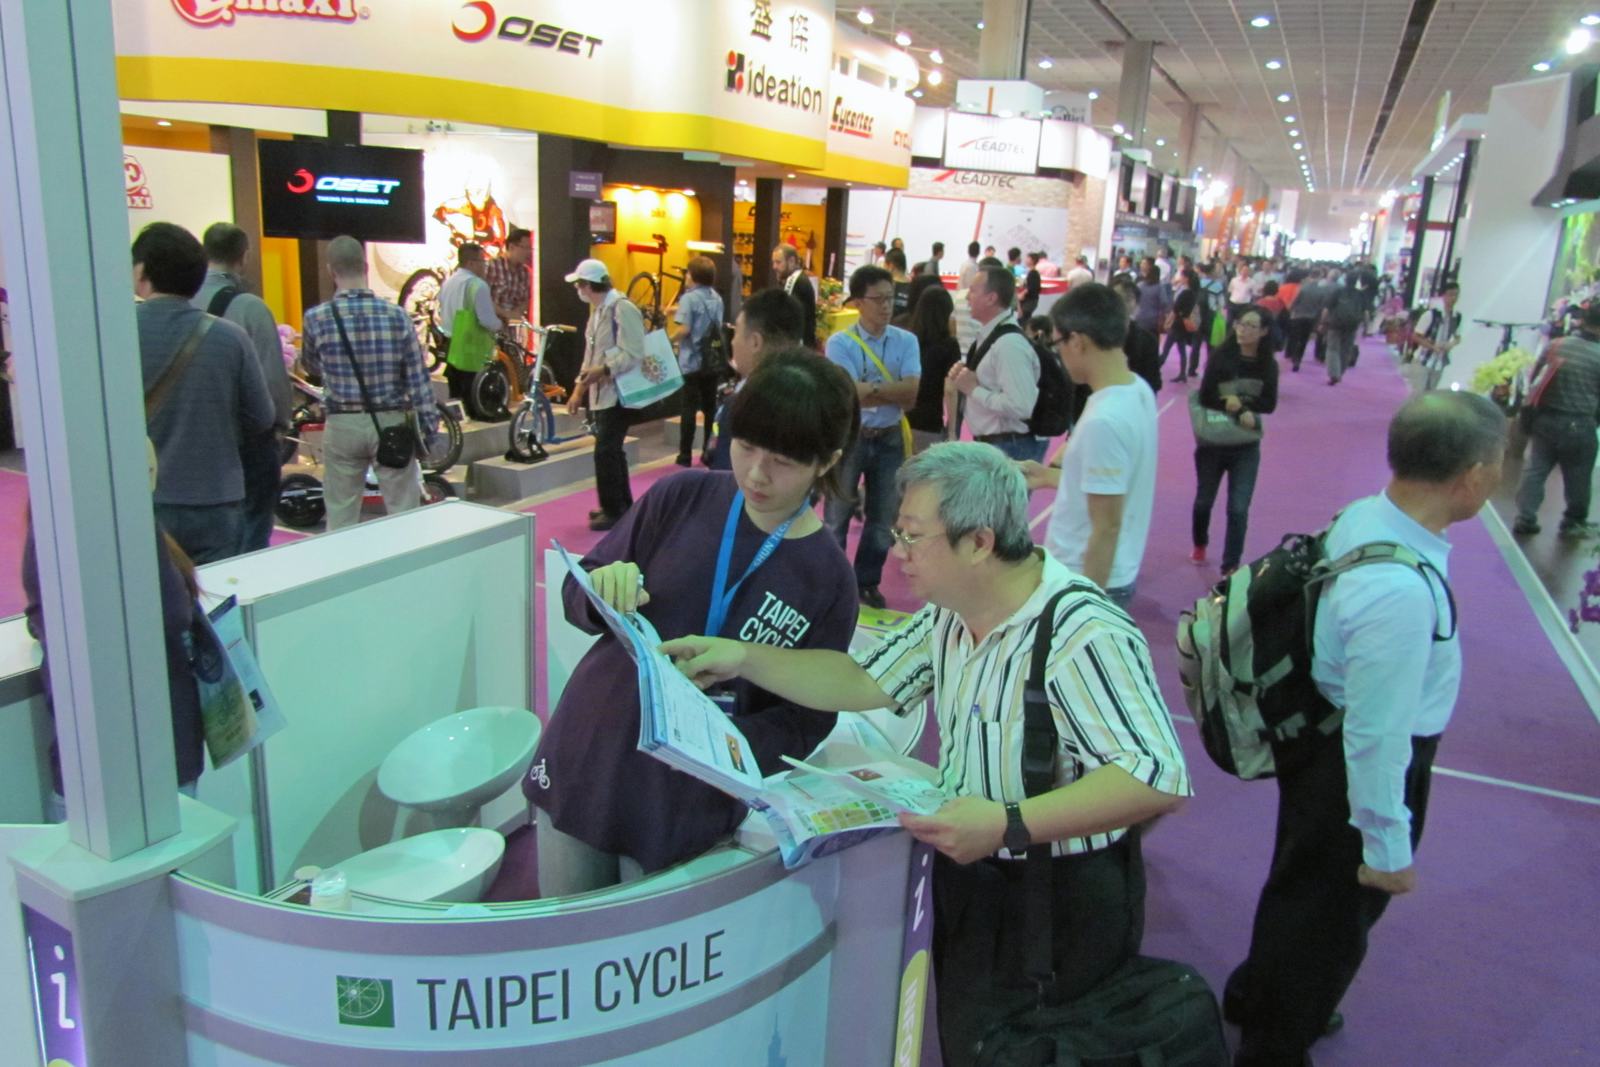 Taipei Cycle 2015 Points to Big Price Hikes